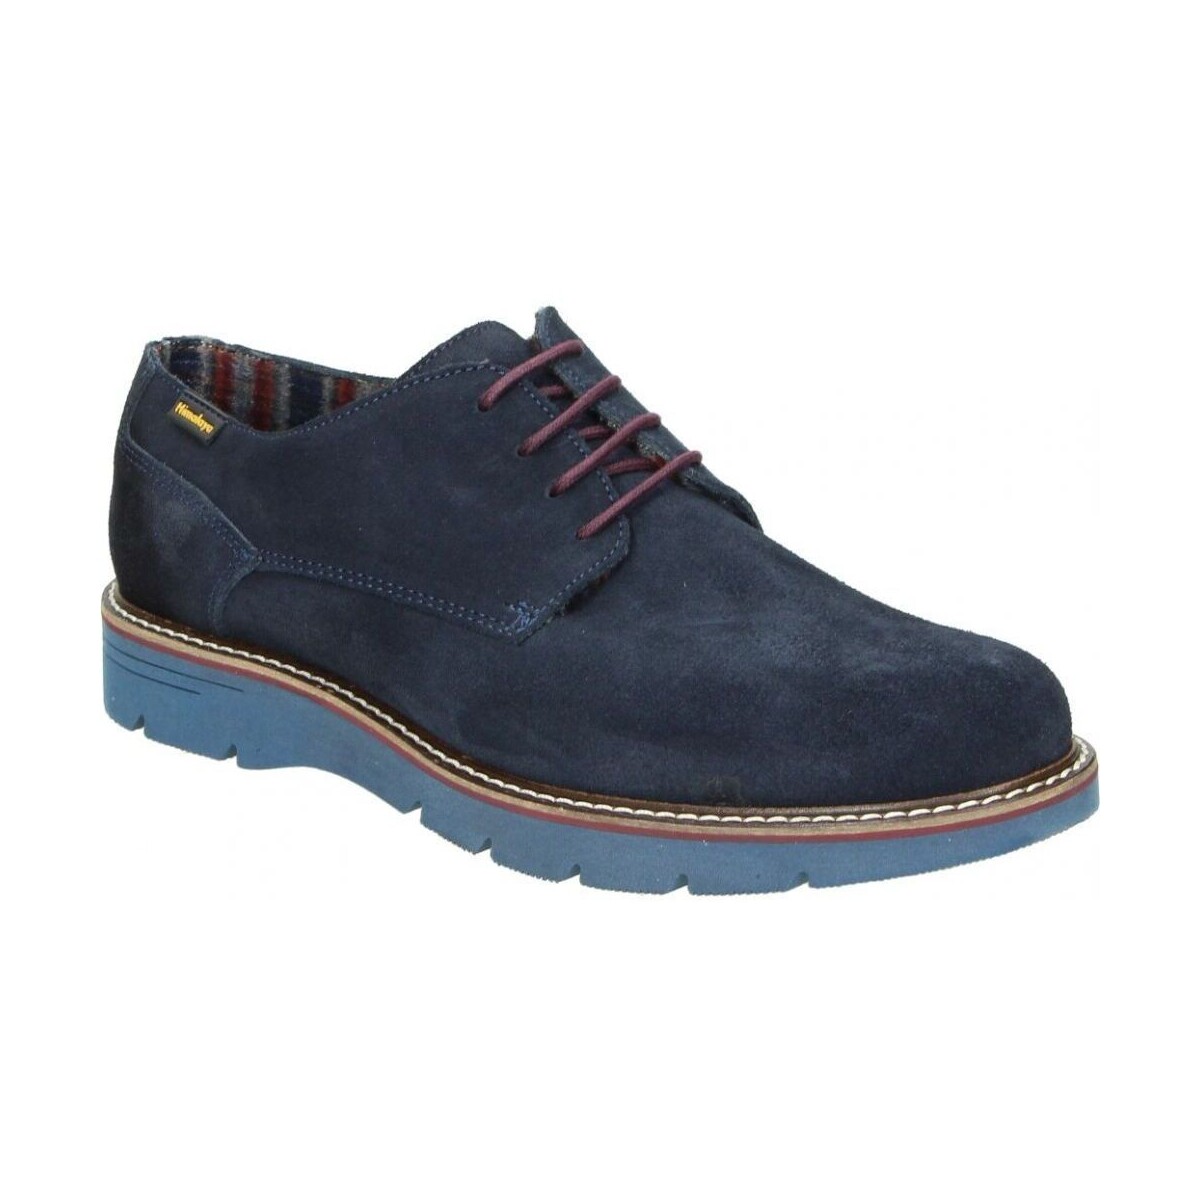 Schuhe Herren Derby-Schuhe & Richelieu Himalaya 2801 Blau